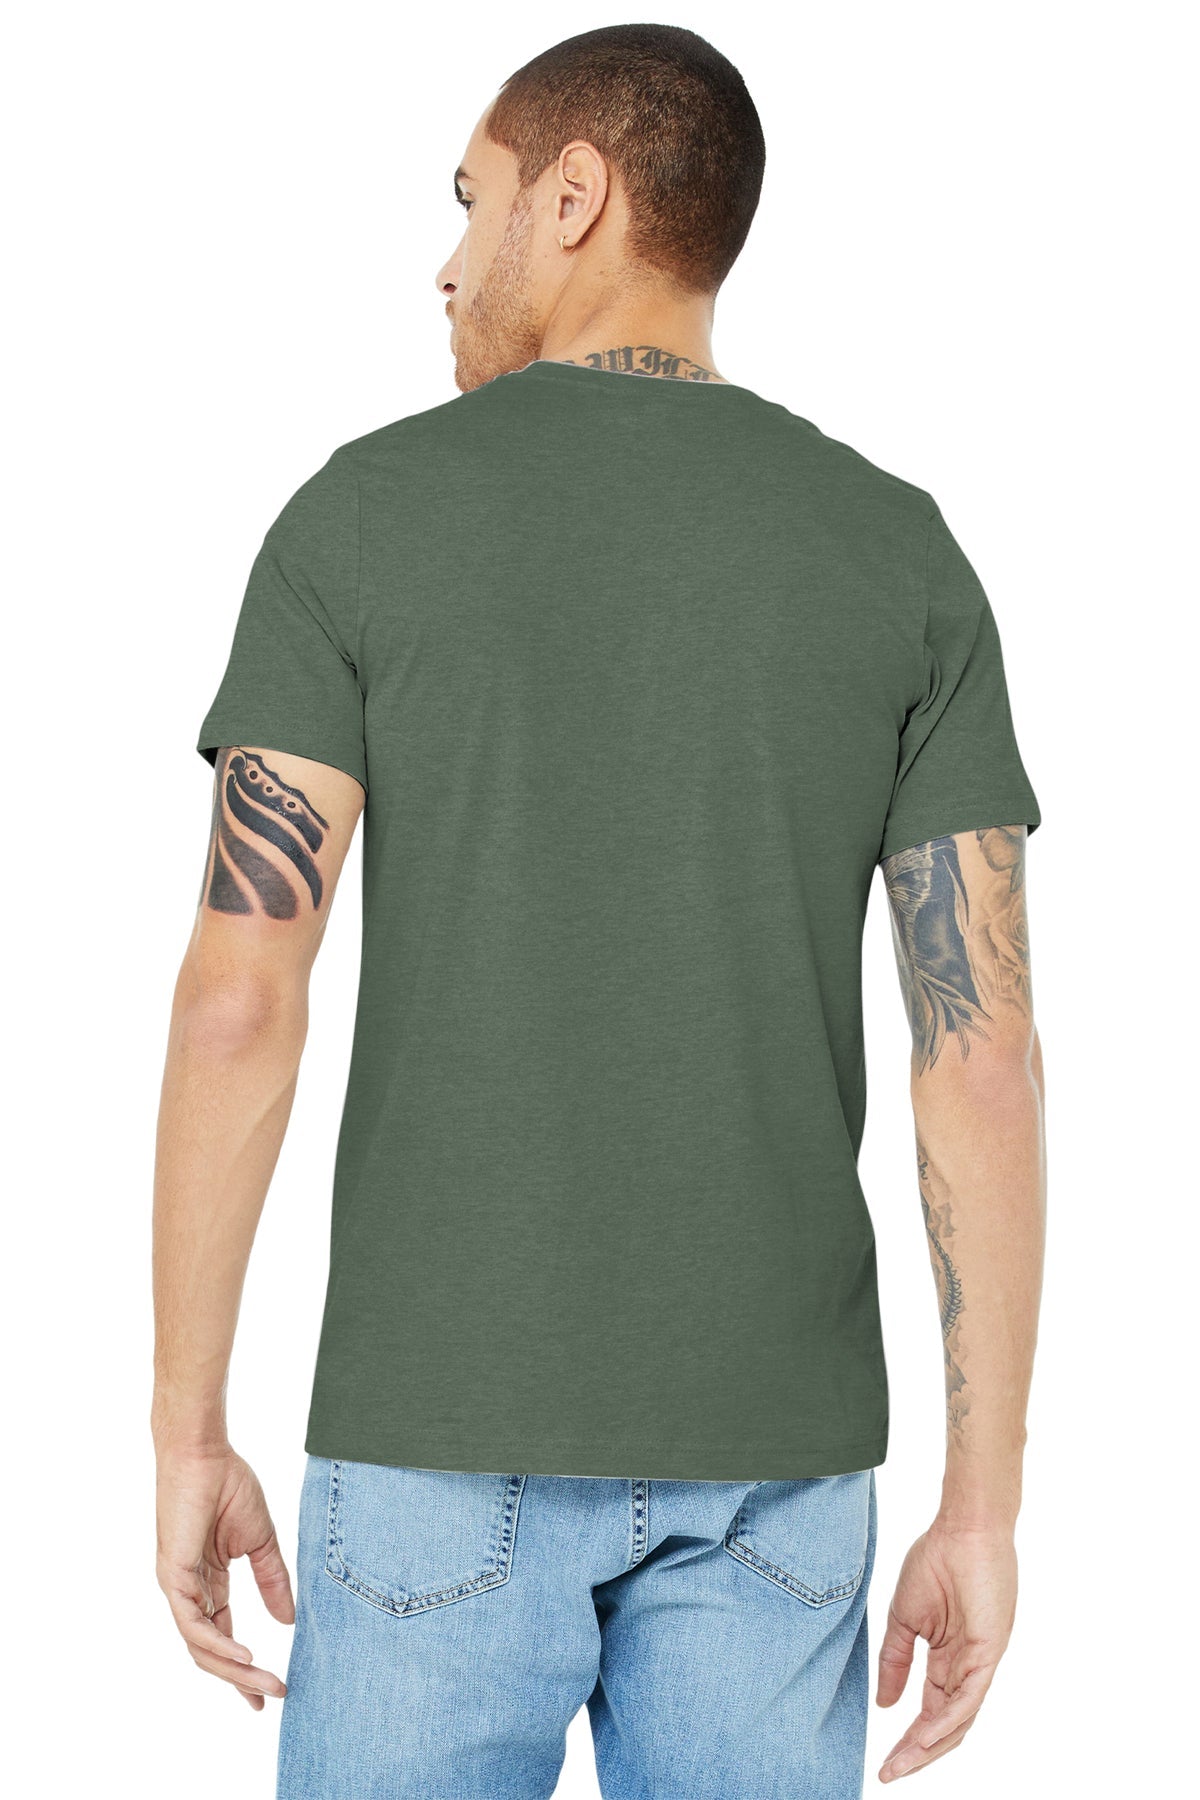 bella + canvas unisex jersey short sleeve t-shirt 3001c hthr miltary grn